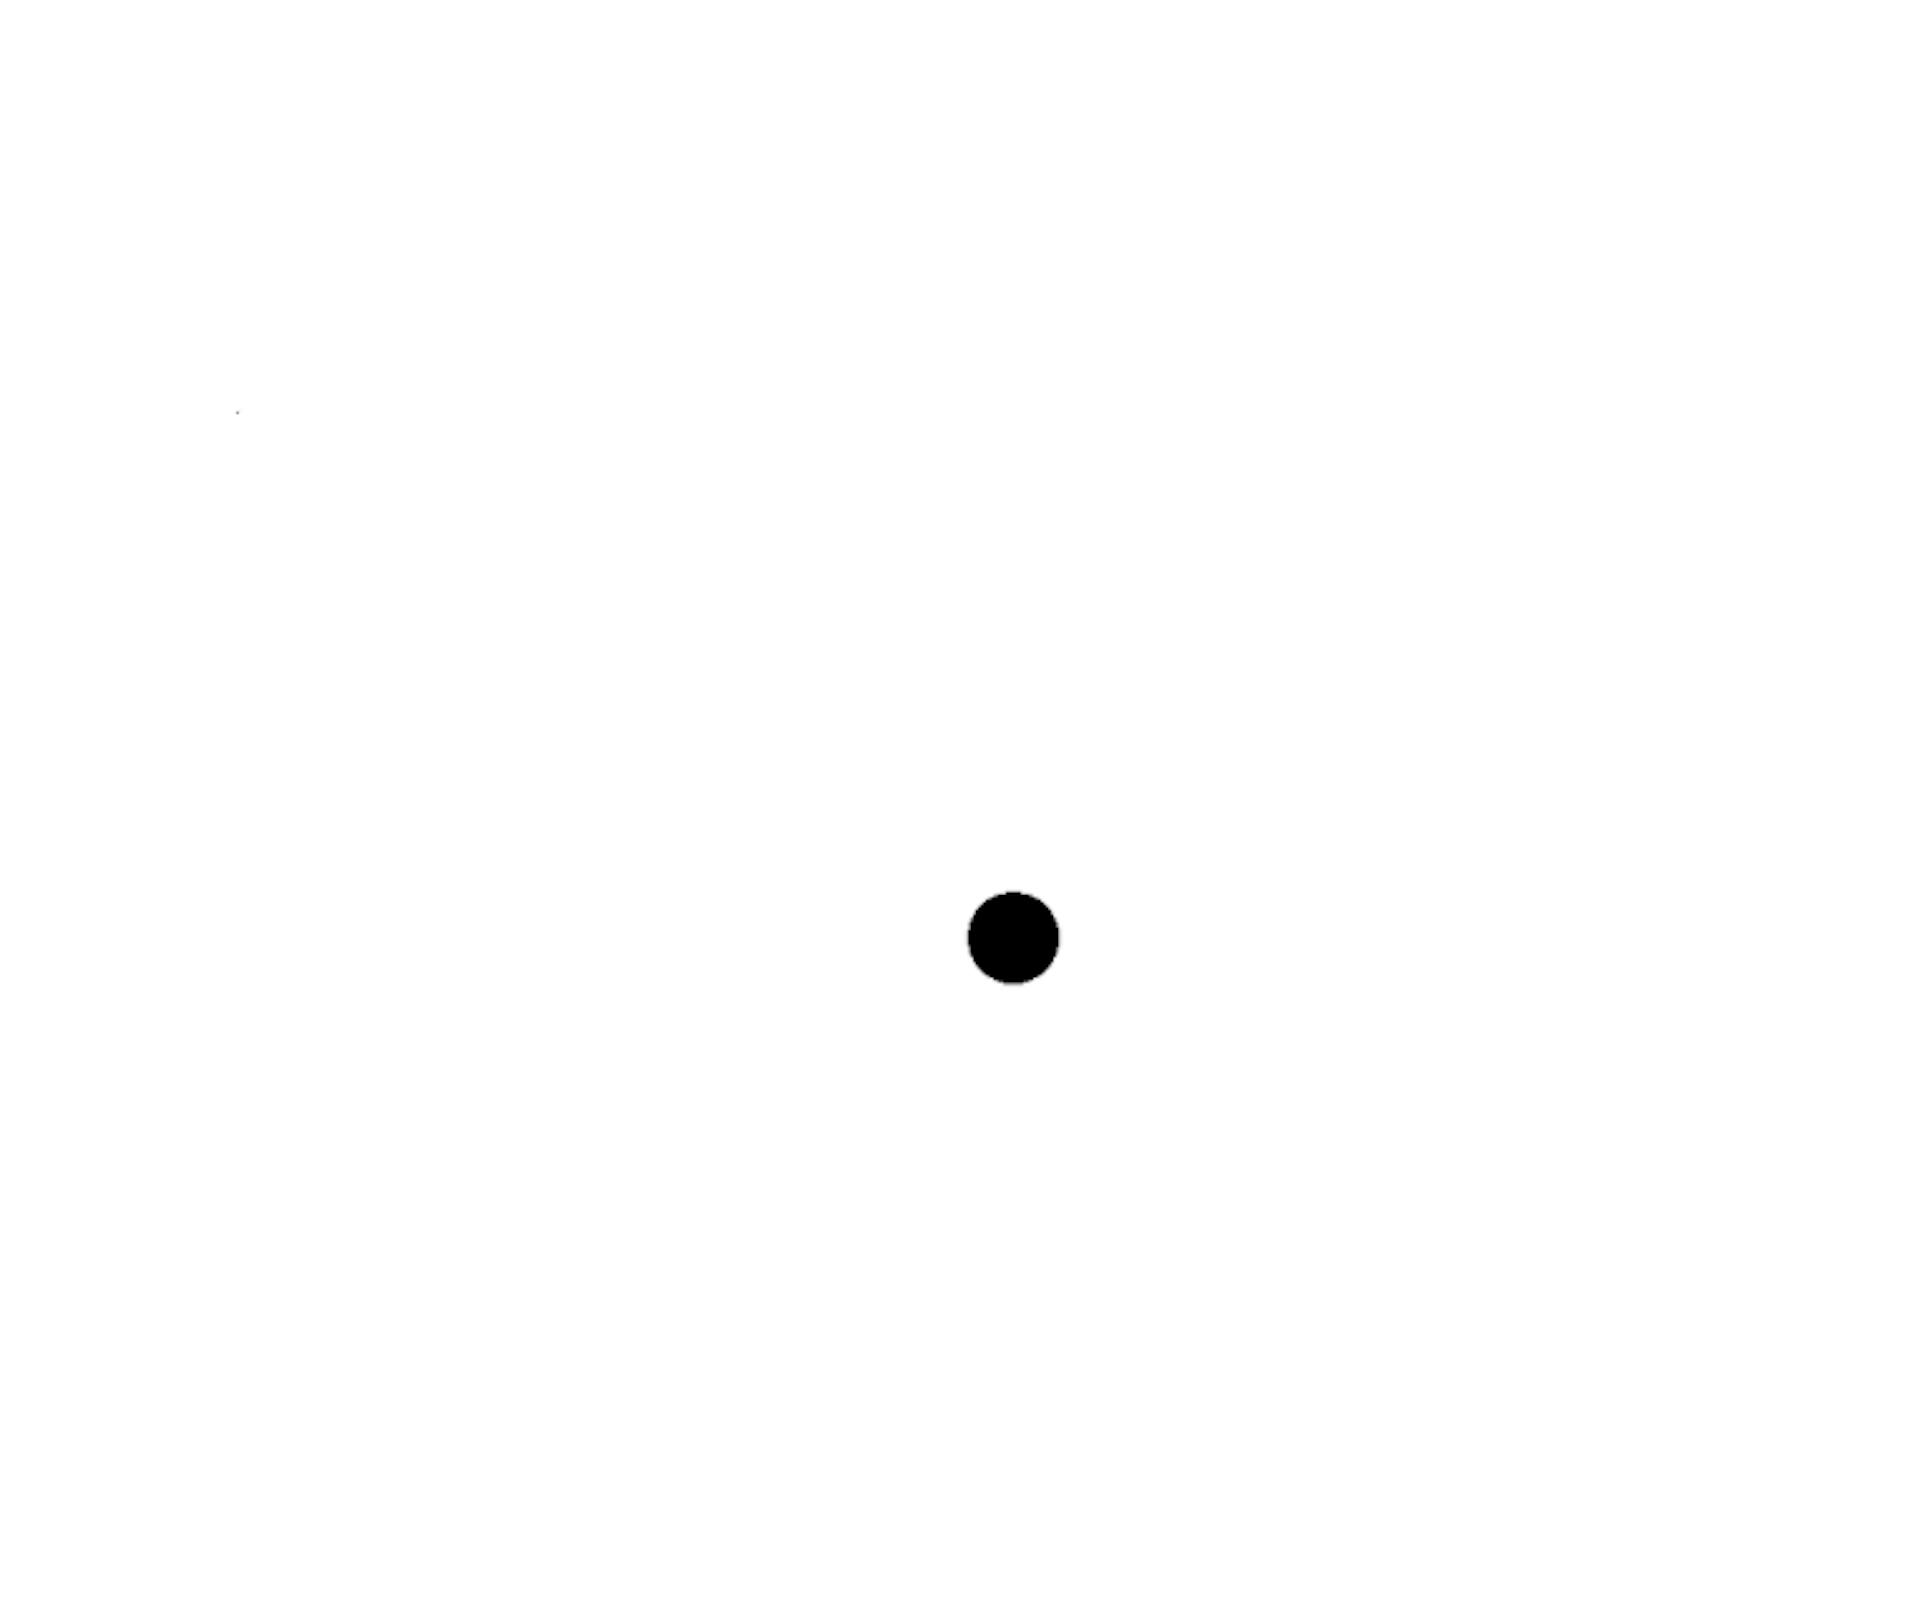 Image 1: The Dot